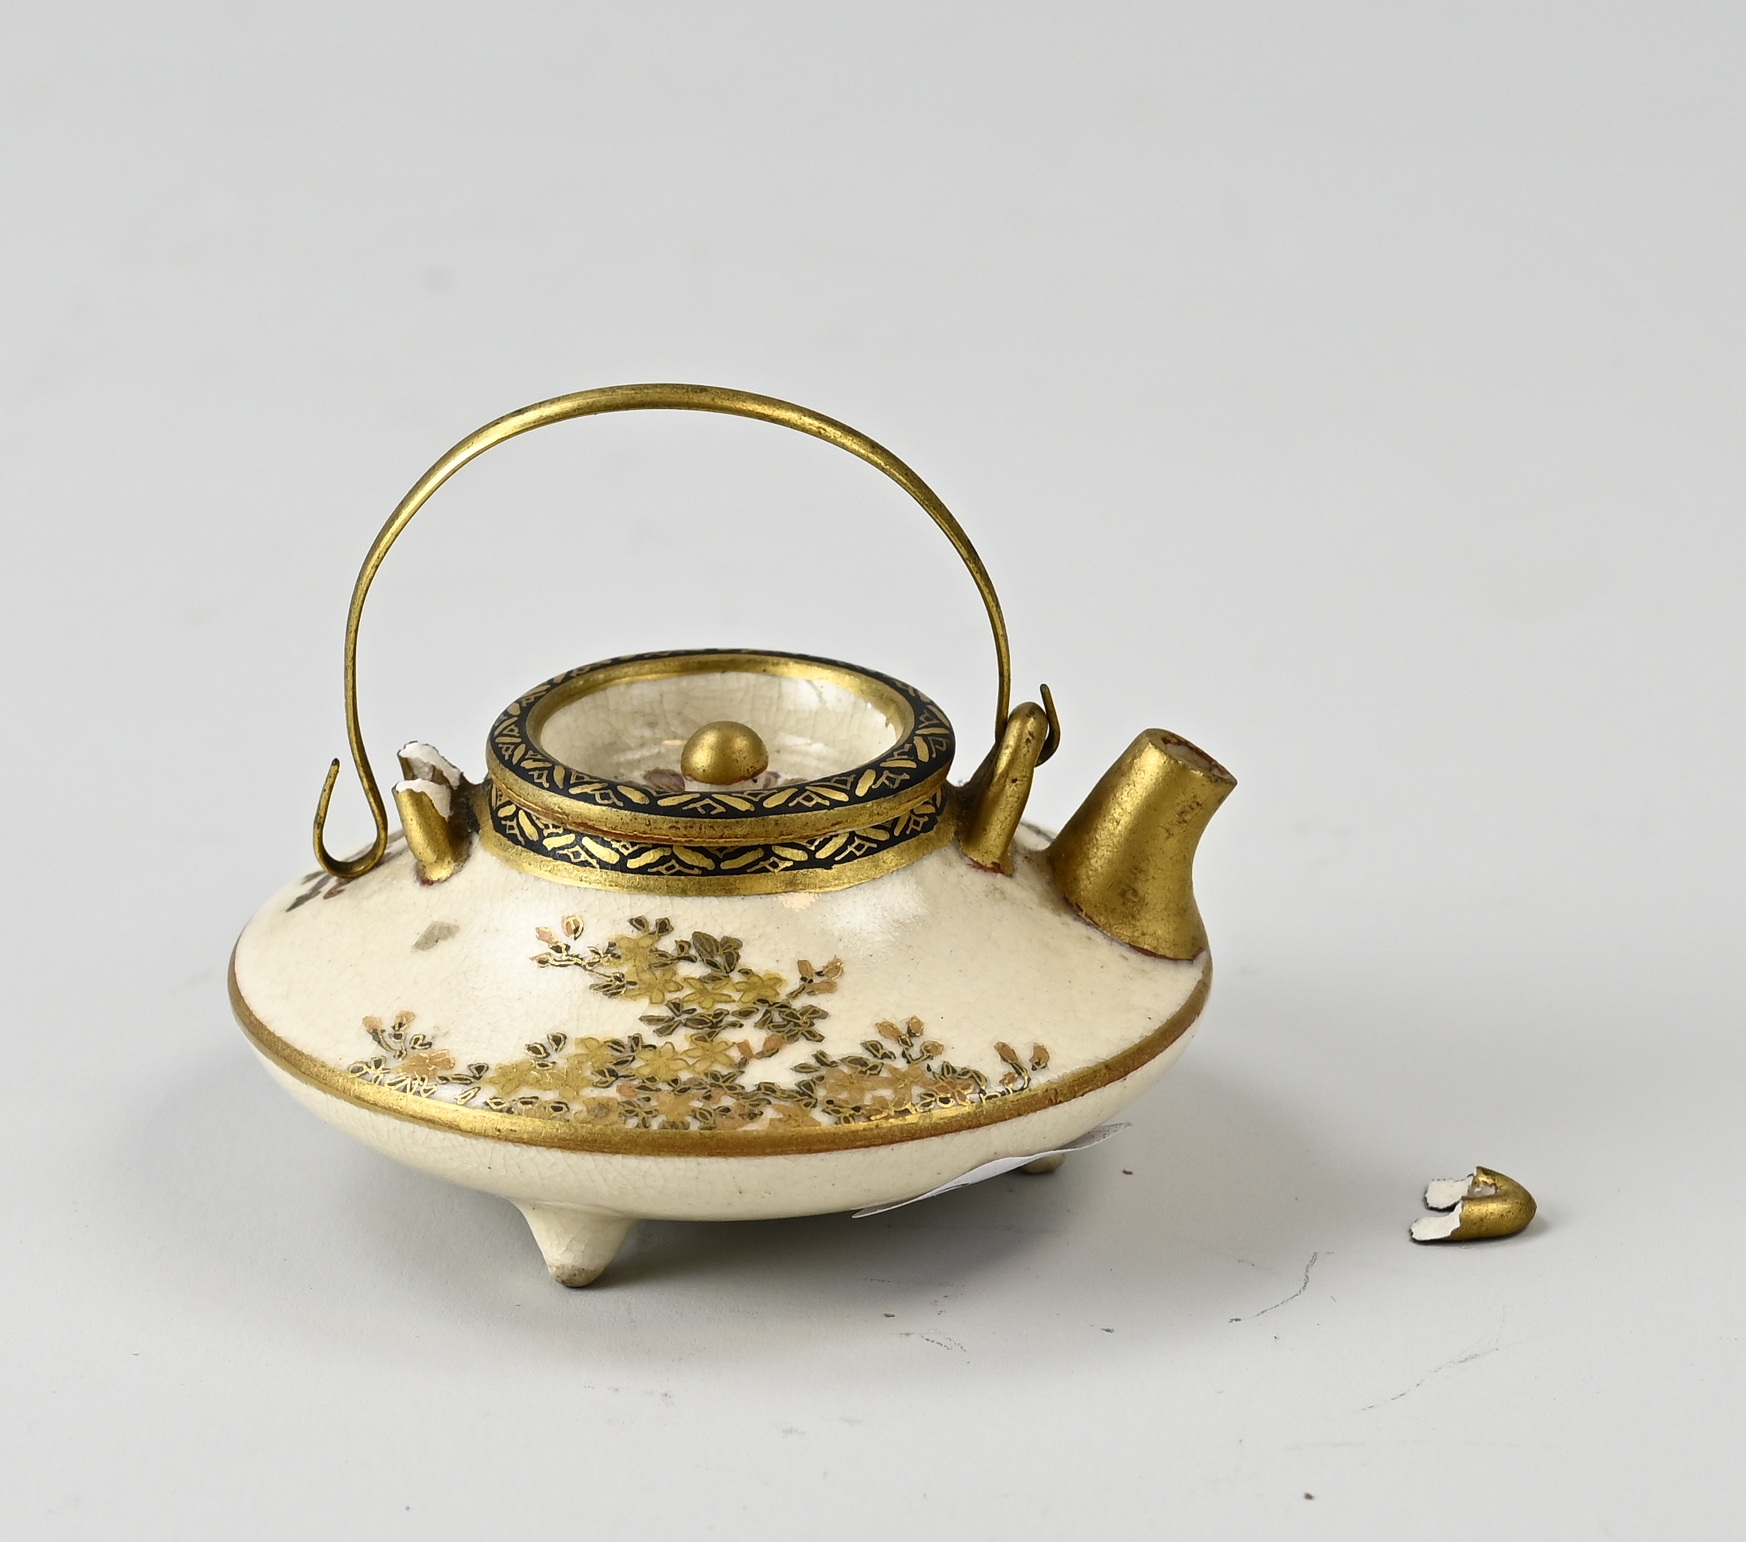 Antique Japanese Satsuma teapot - Image 2 of 3